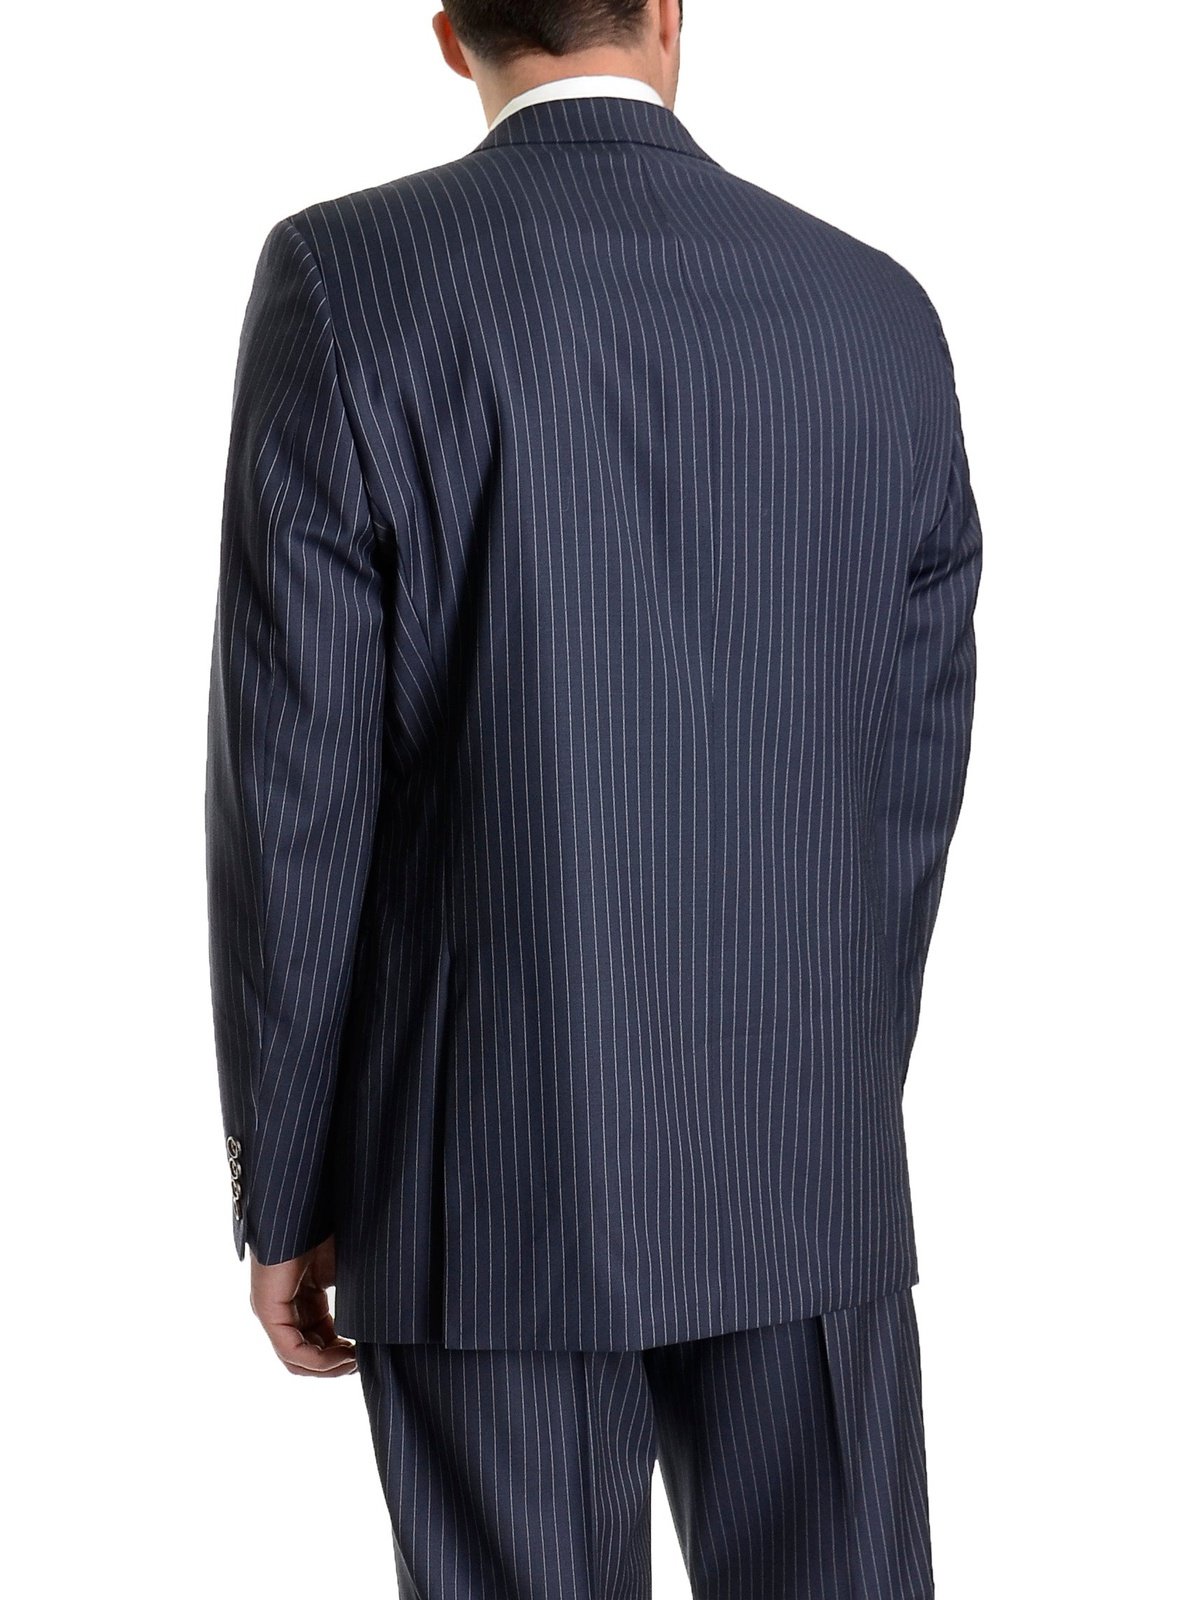 Ralph Lauren Slim Fit  Navy Blue Pinstriped Two Button Wool Suit - The Suit Depot